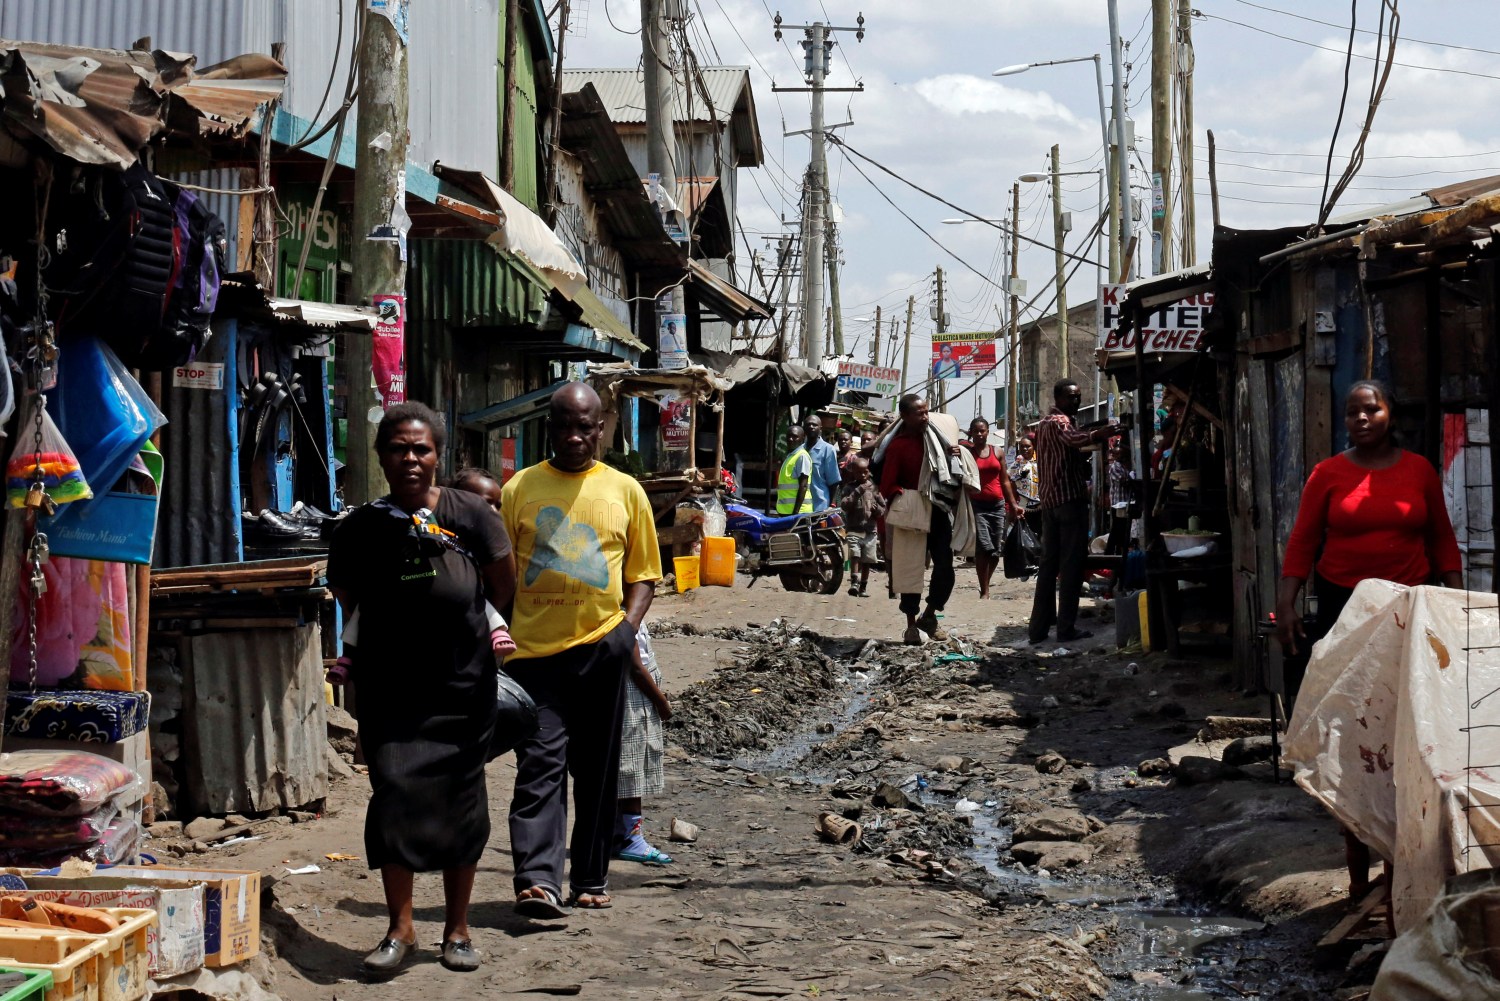 Residents walk along an alleyway with an open sewer at the Mukuru slum in Nairobi, Kenya July 19, 2017. REUTERS/Thomas Mukoya